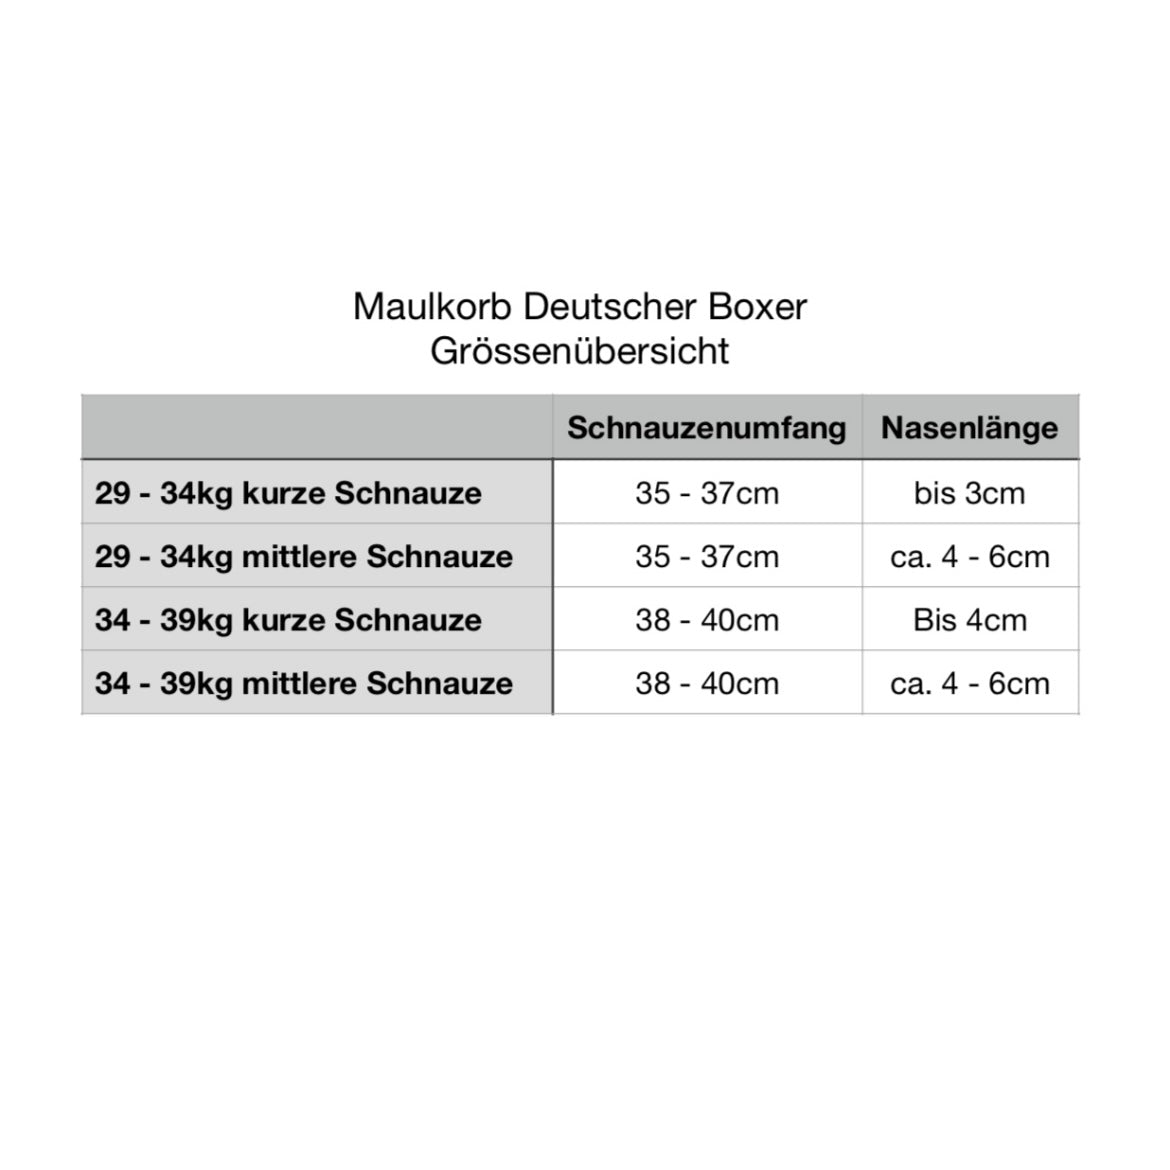 Maulkorb Deutscher Boxer